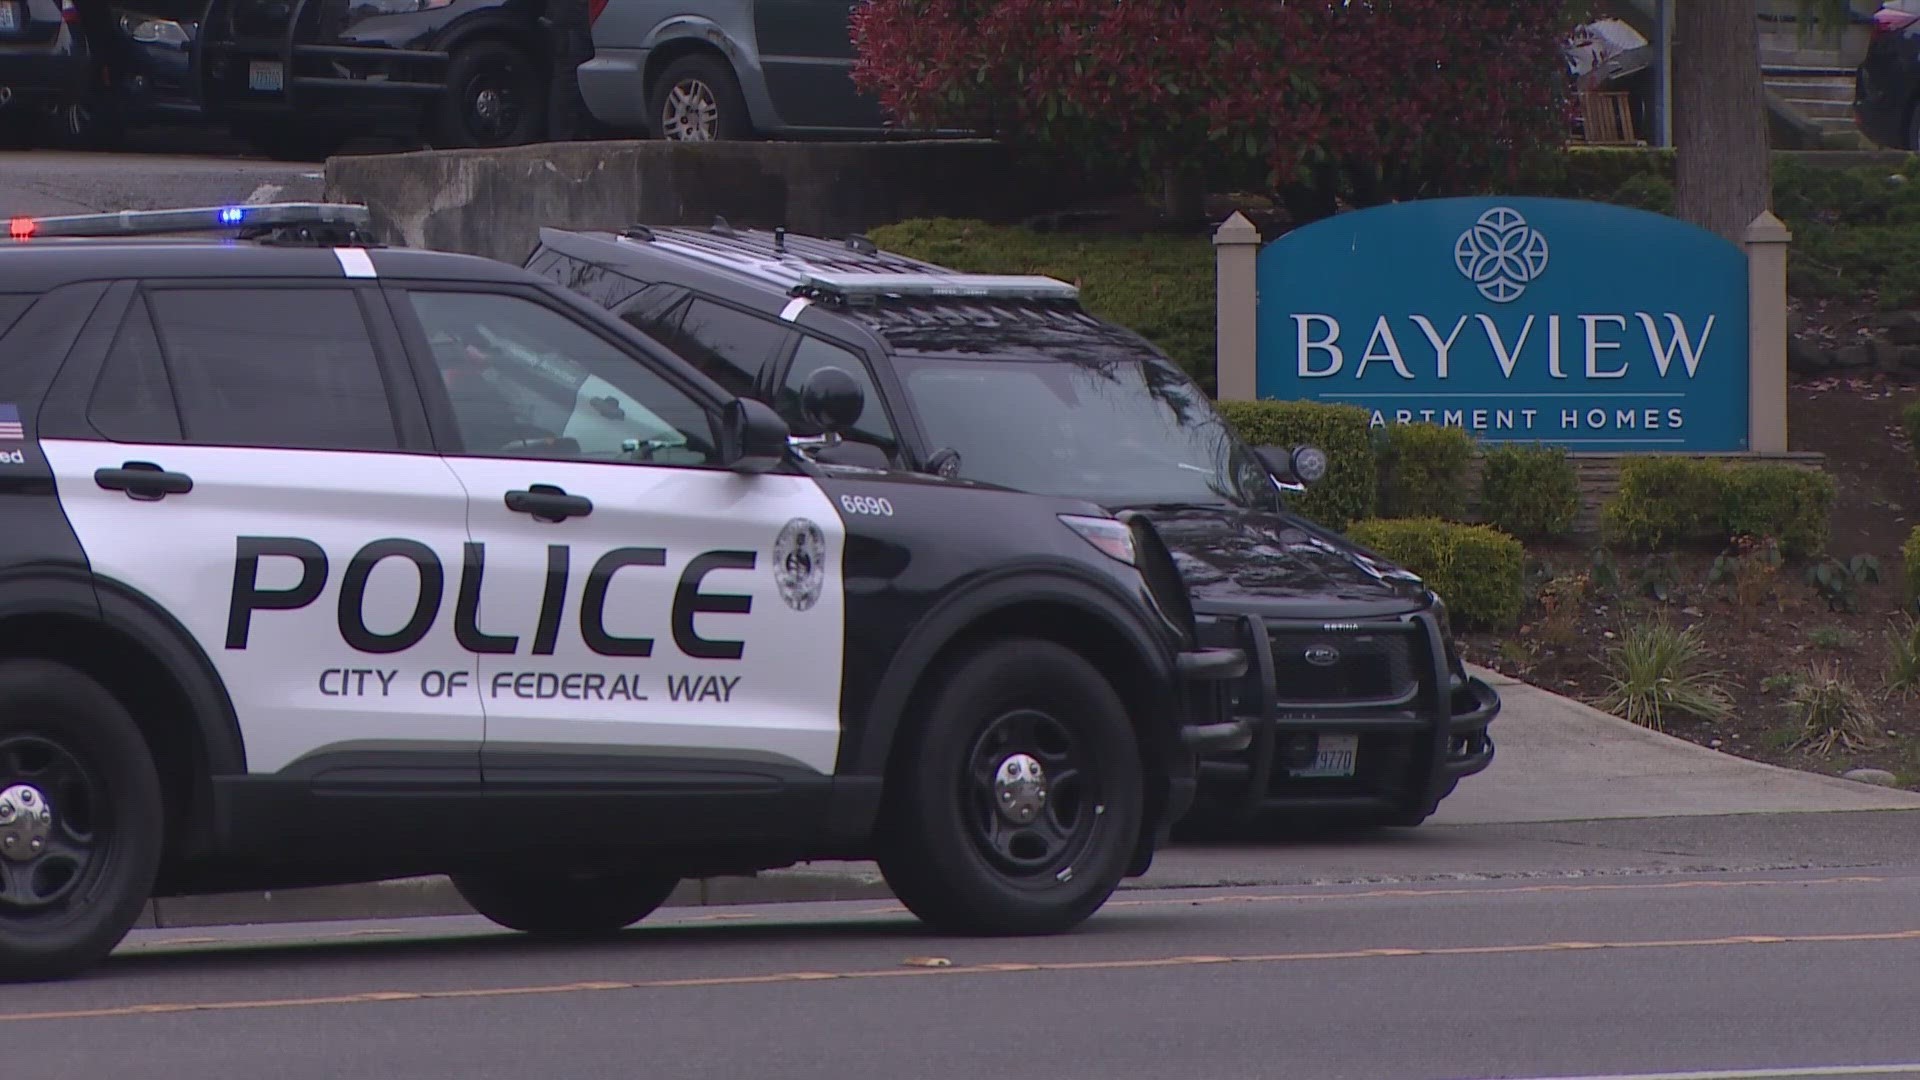 Police said the suspect fled in a blue Hyundai Elantra.